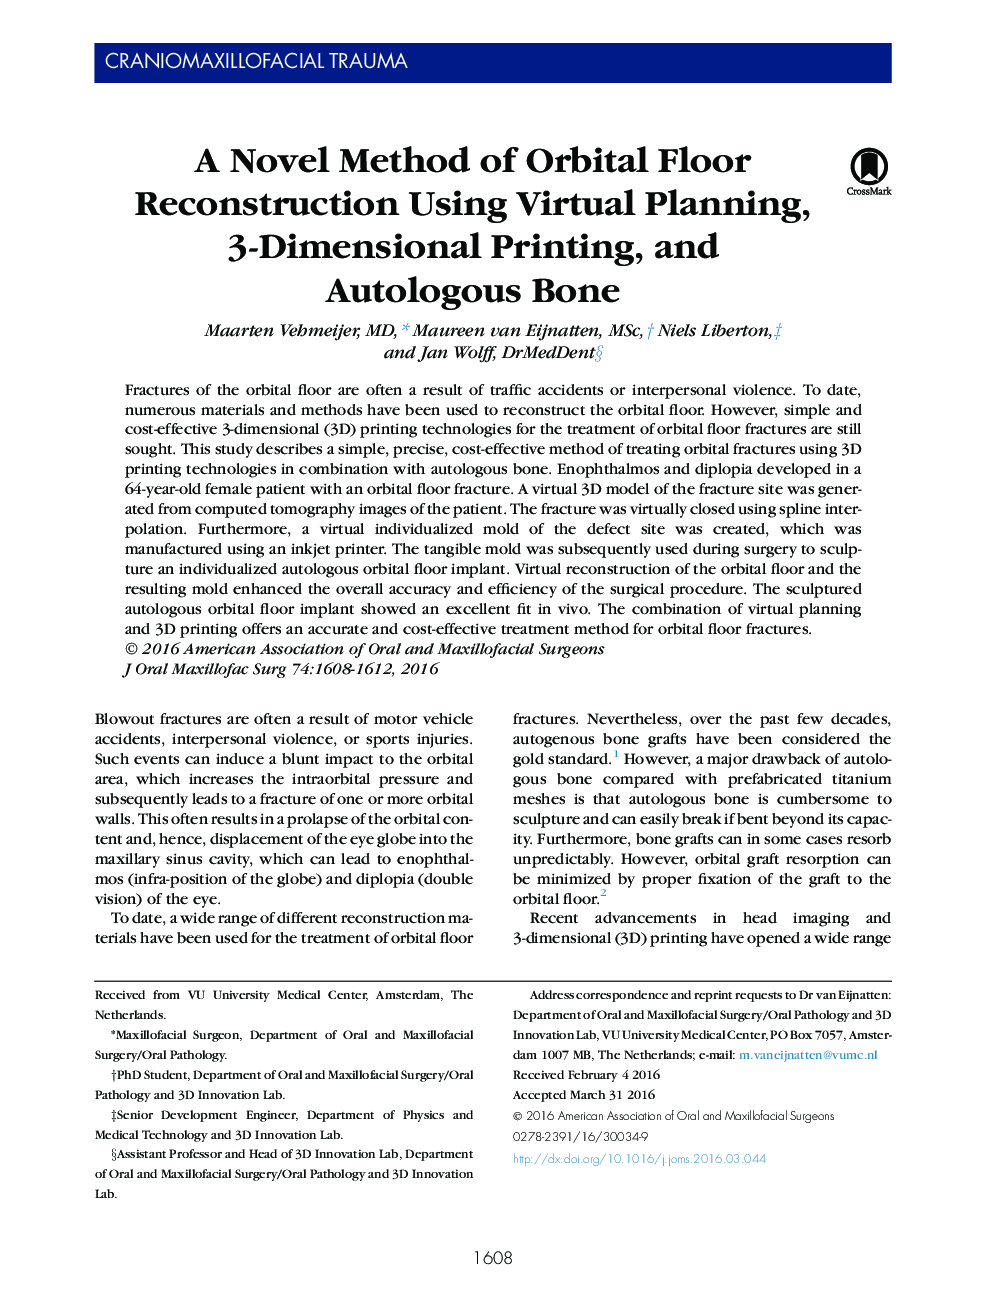 A Novel Method of Orbital Floor Reconstruction Using Virtual Planning, 3-Dimensional Printing, and Autologous Bone